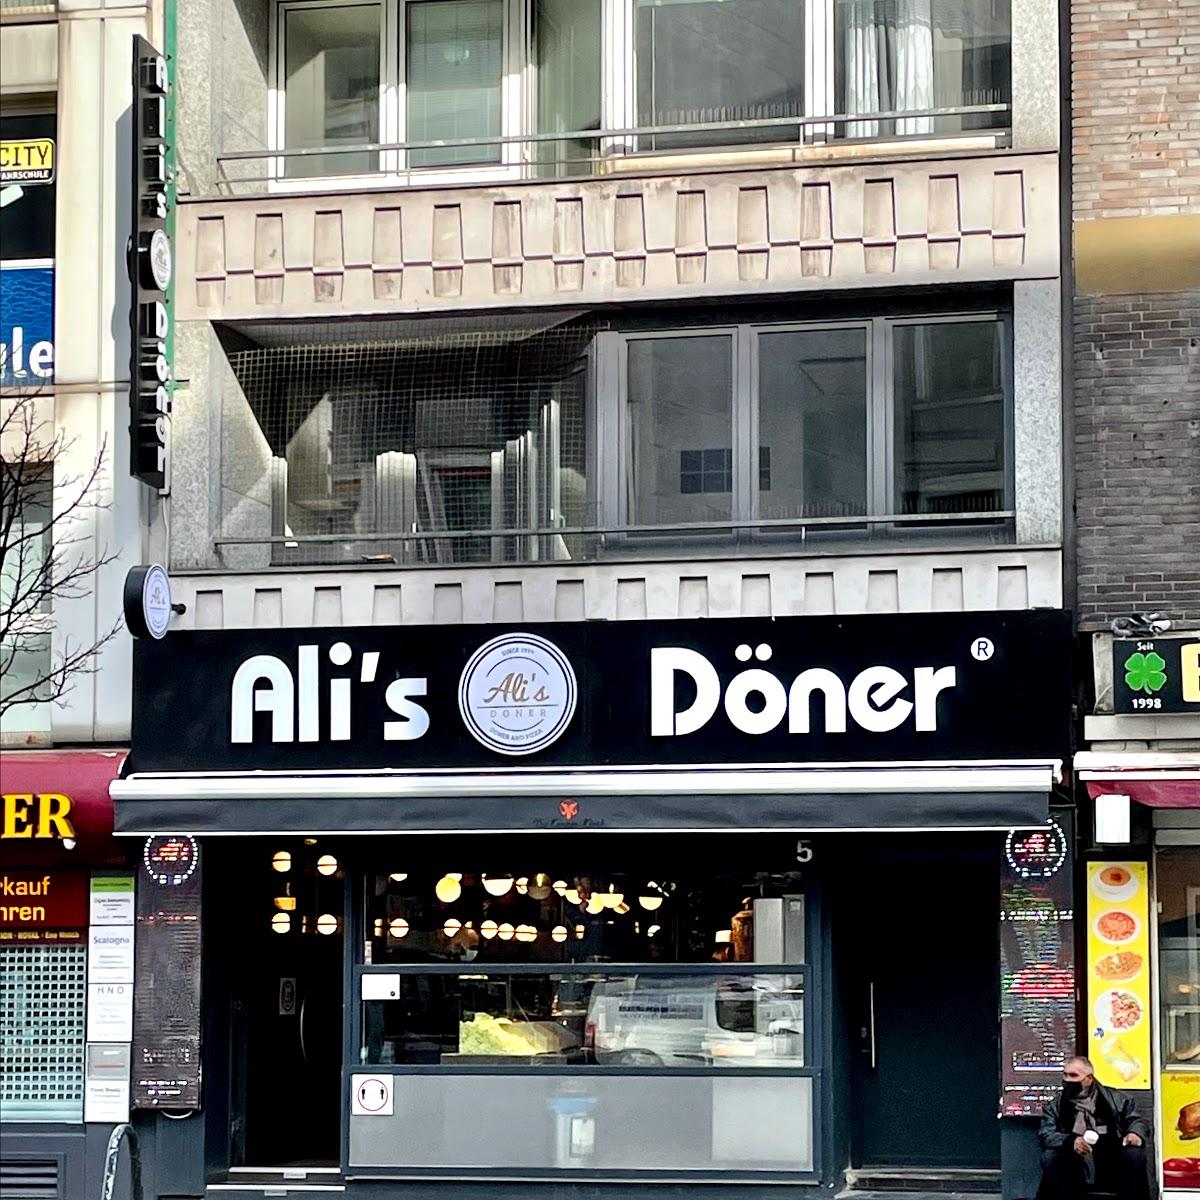 Restaurant "Ali